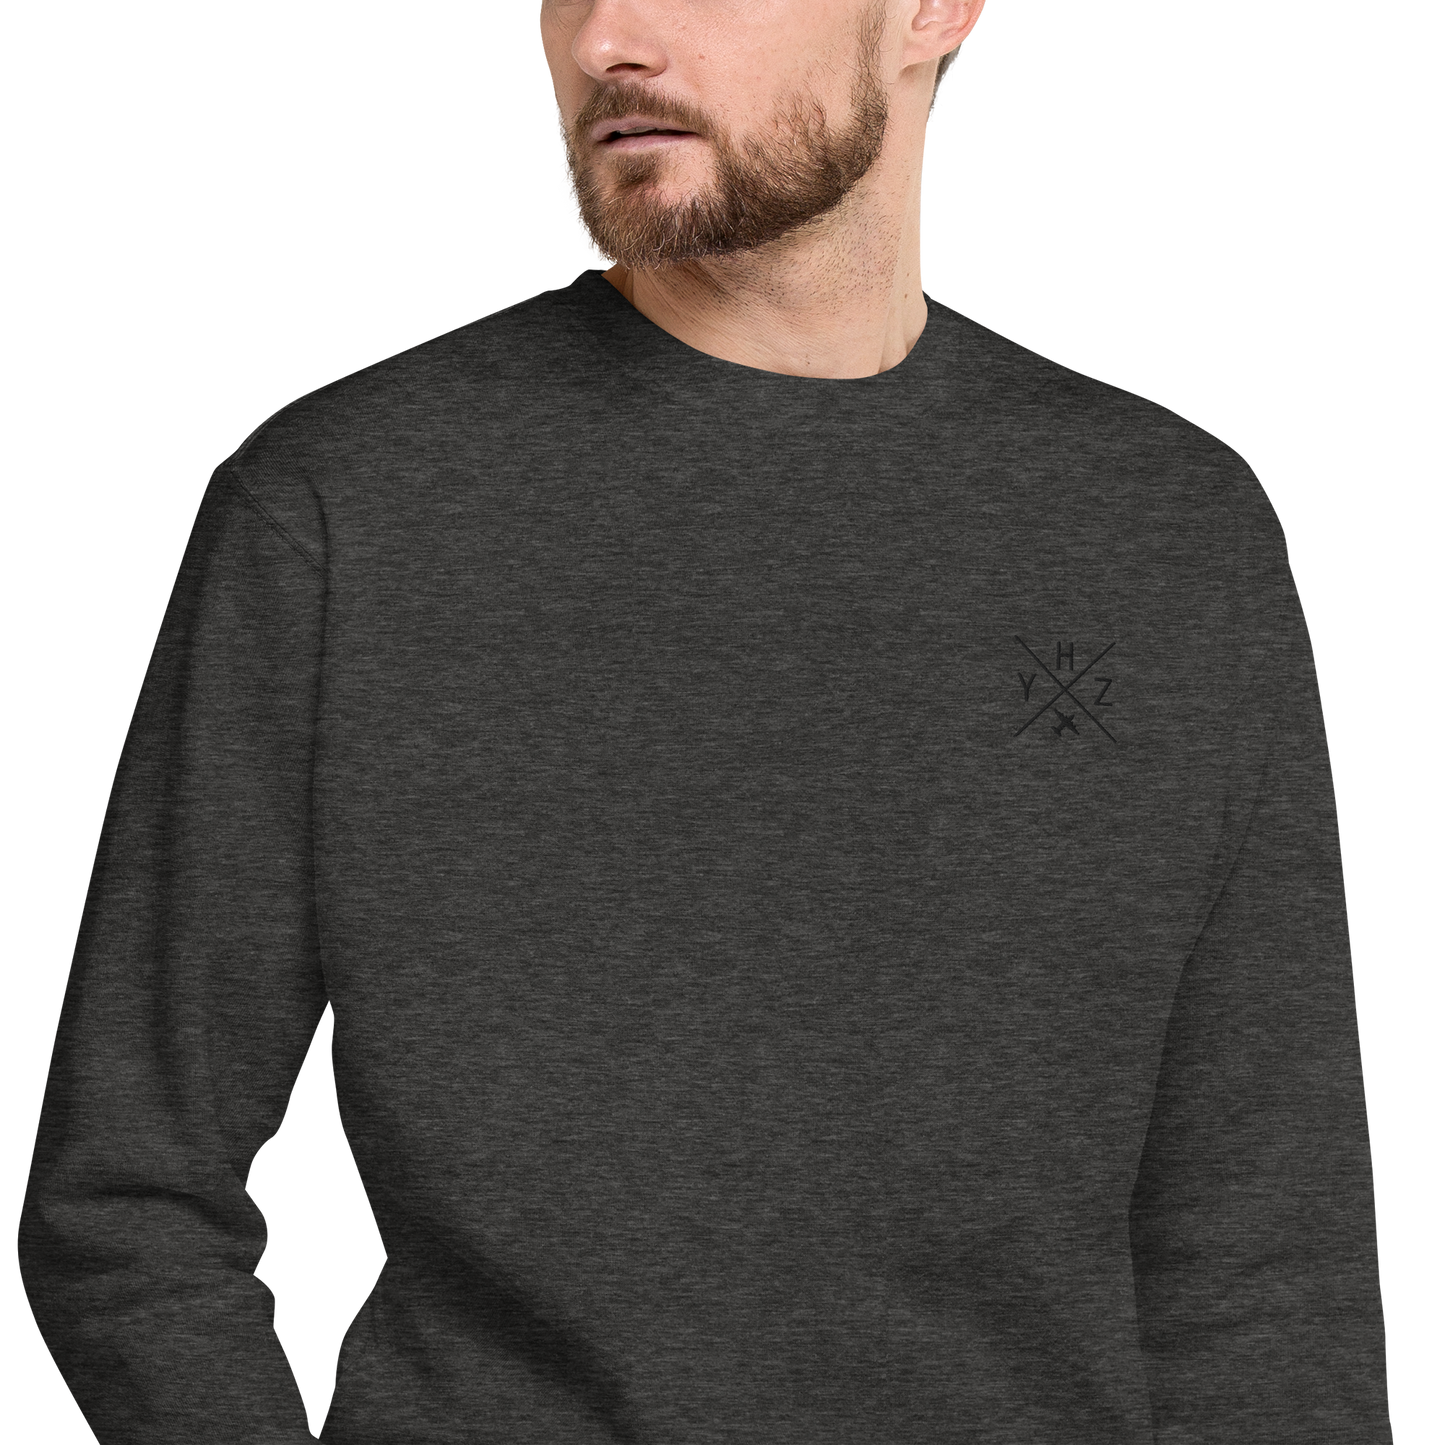 YHM Designs - YHZ Halifax Premium Sweatshirt - Crossed-X Design with Airport Code and Vintage Propliner - Black Embroidery - Image 07